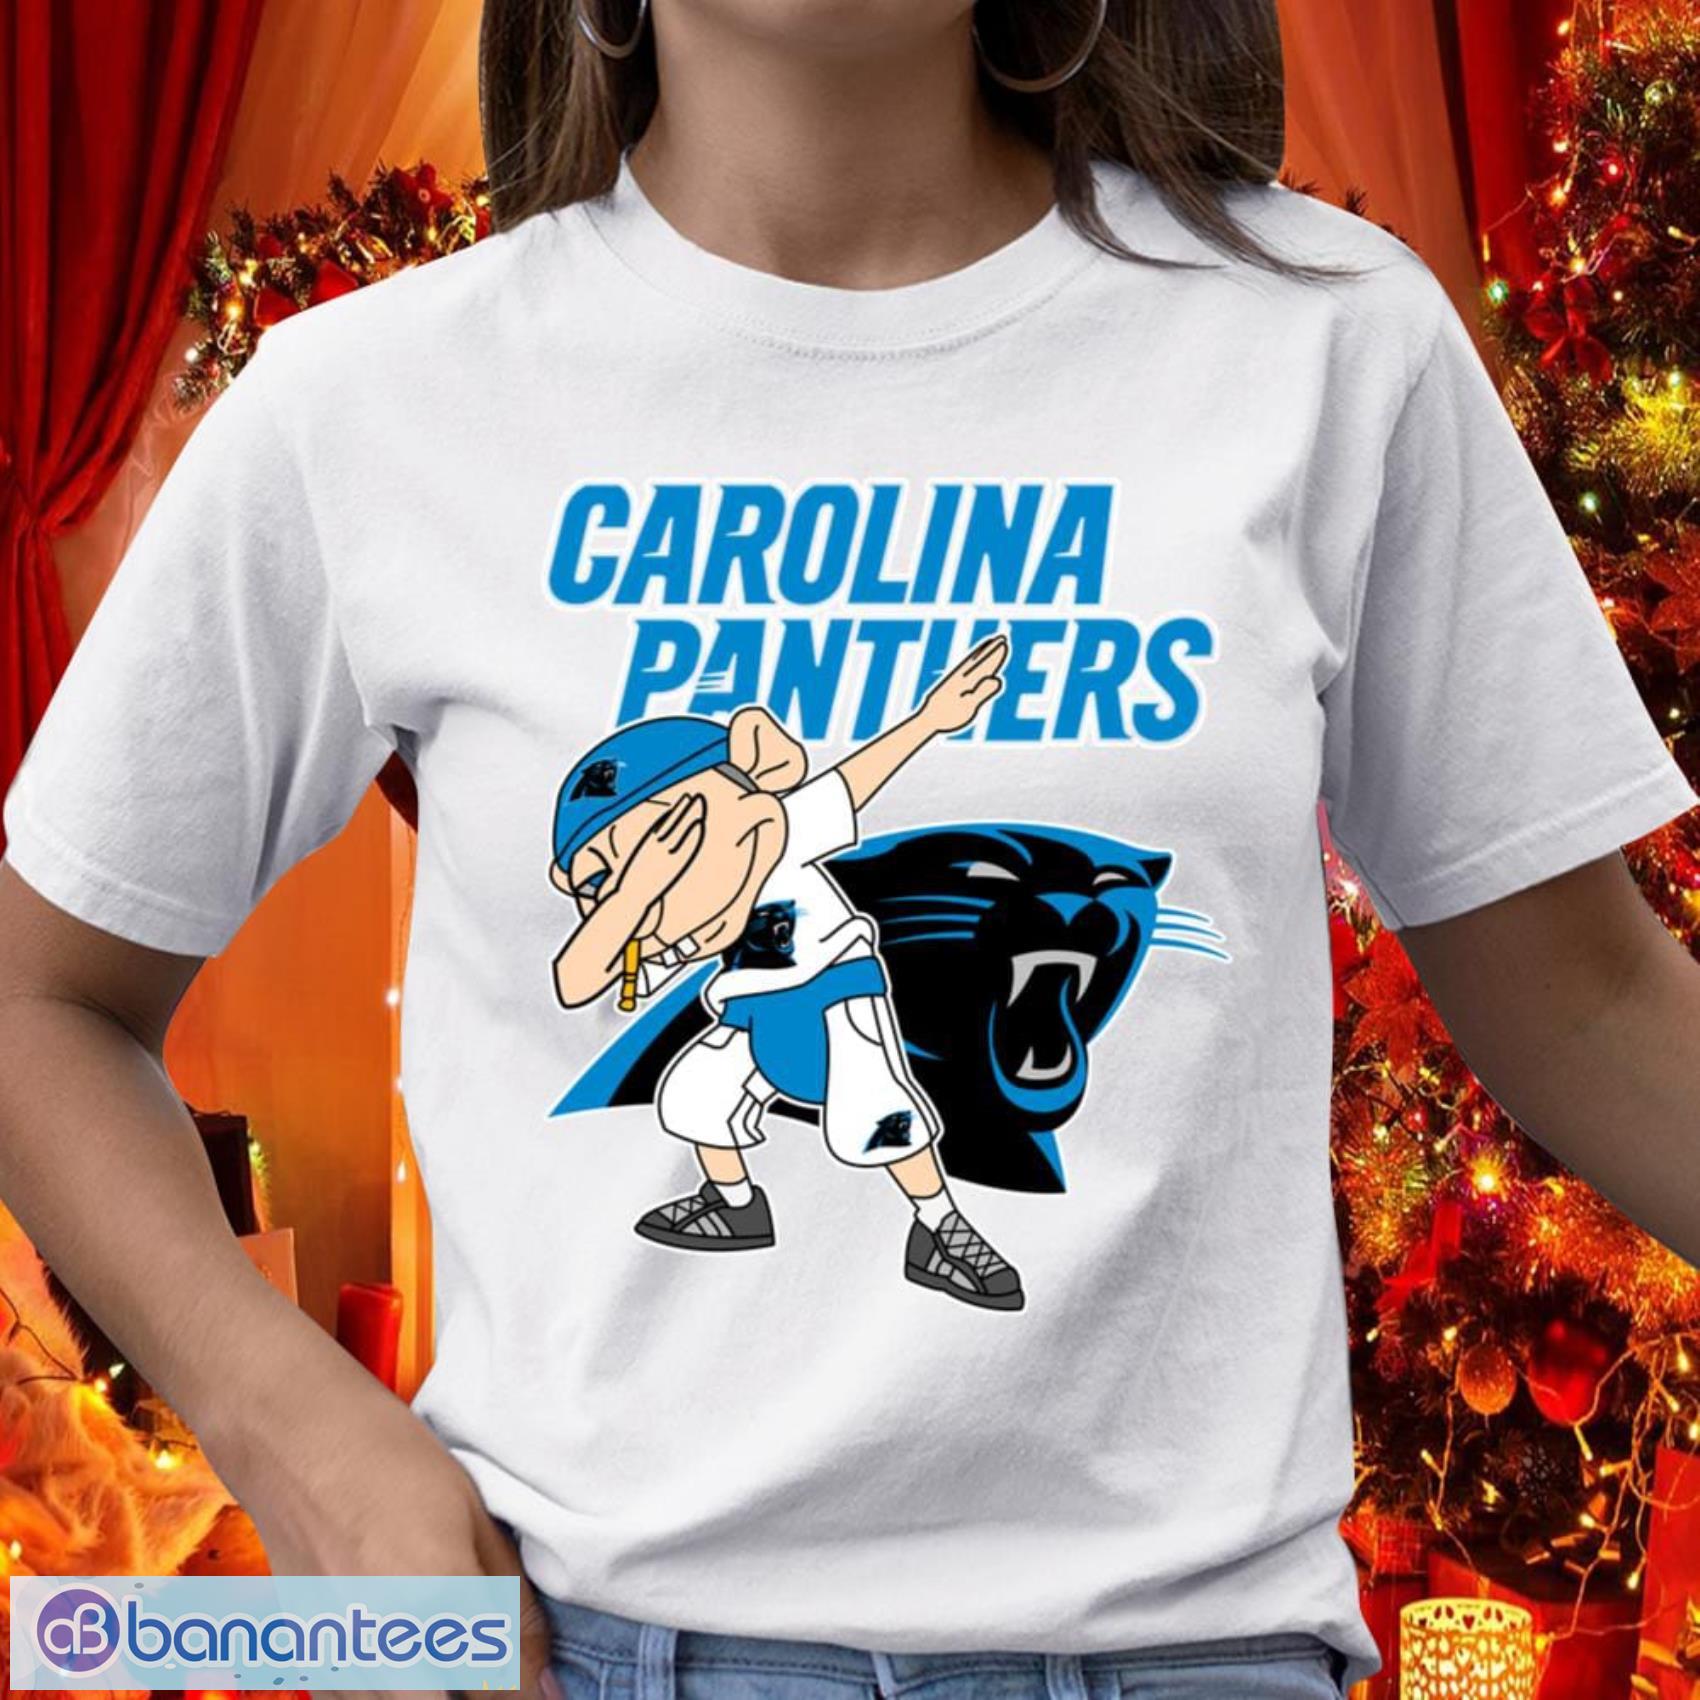 Carolina Panthers NFL Football Gift Fr Fans Jeffy Dabbing Sports T Shirt - Carolina Panthers NFL Football Jeffy Dabbing Sports T Shirt_1